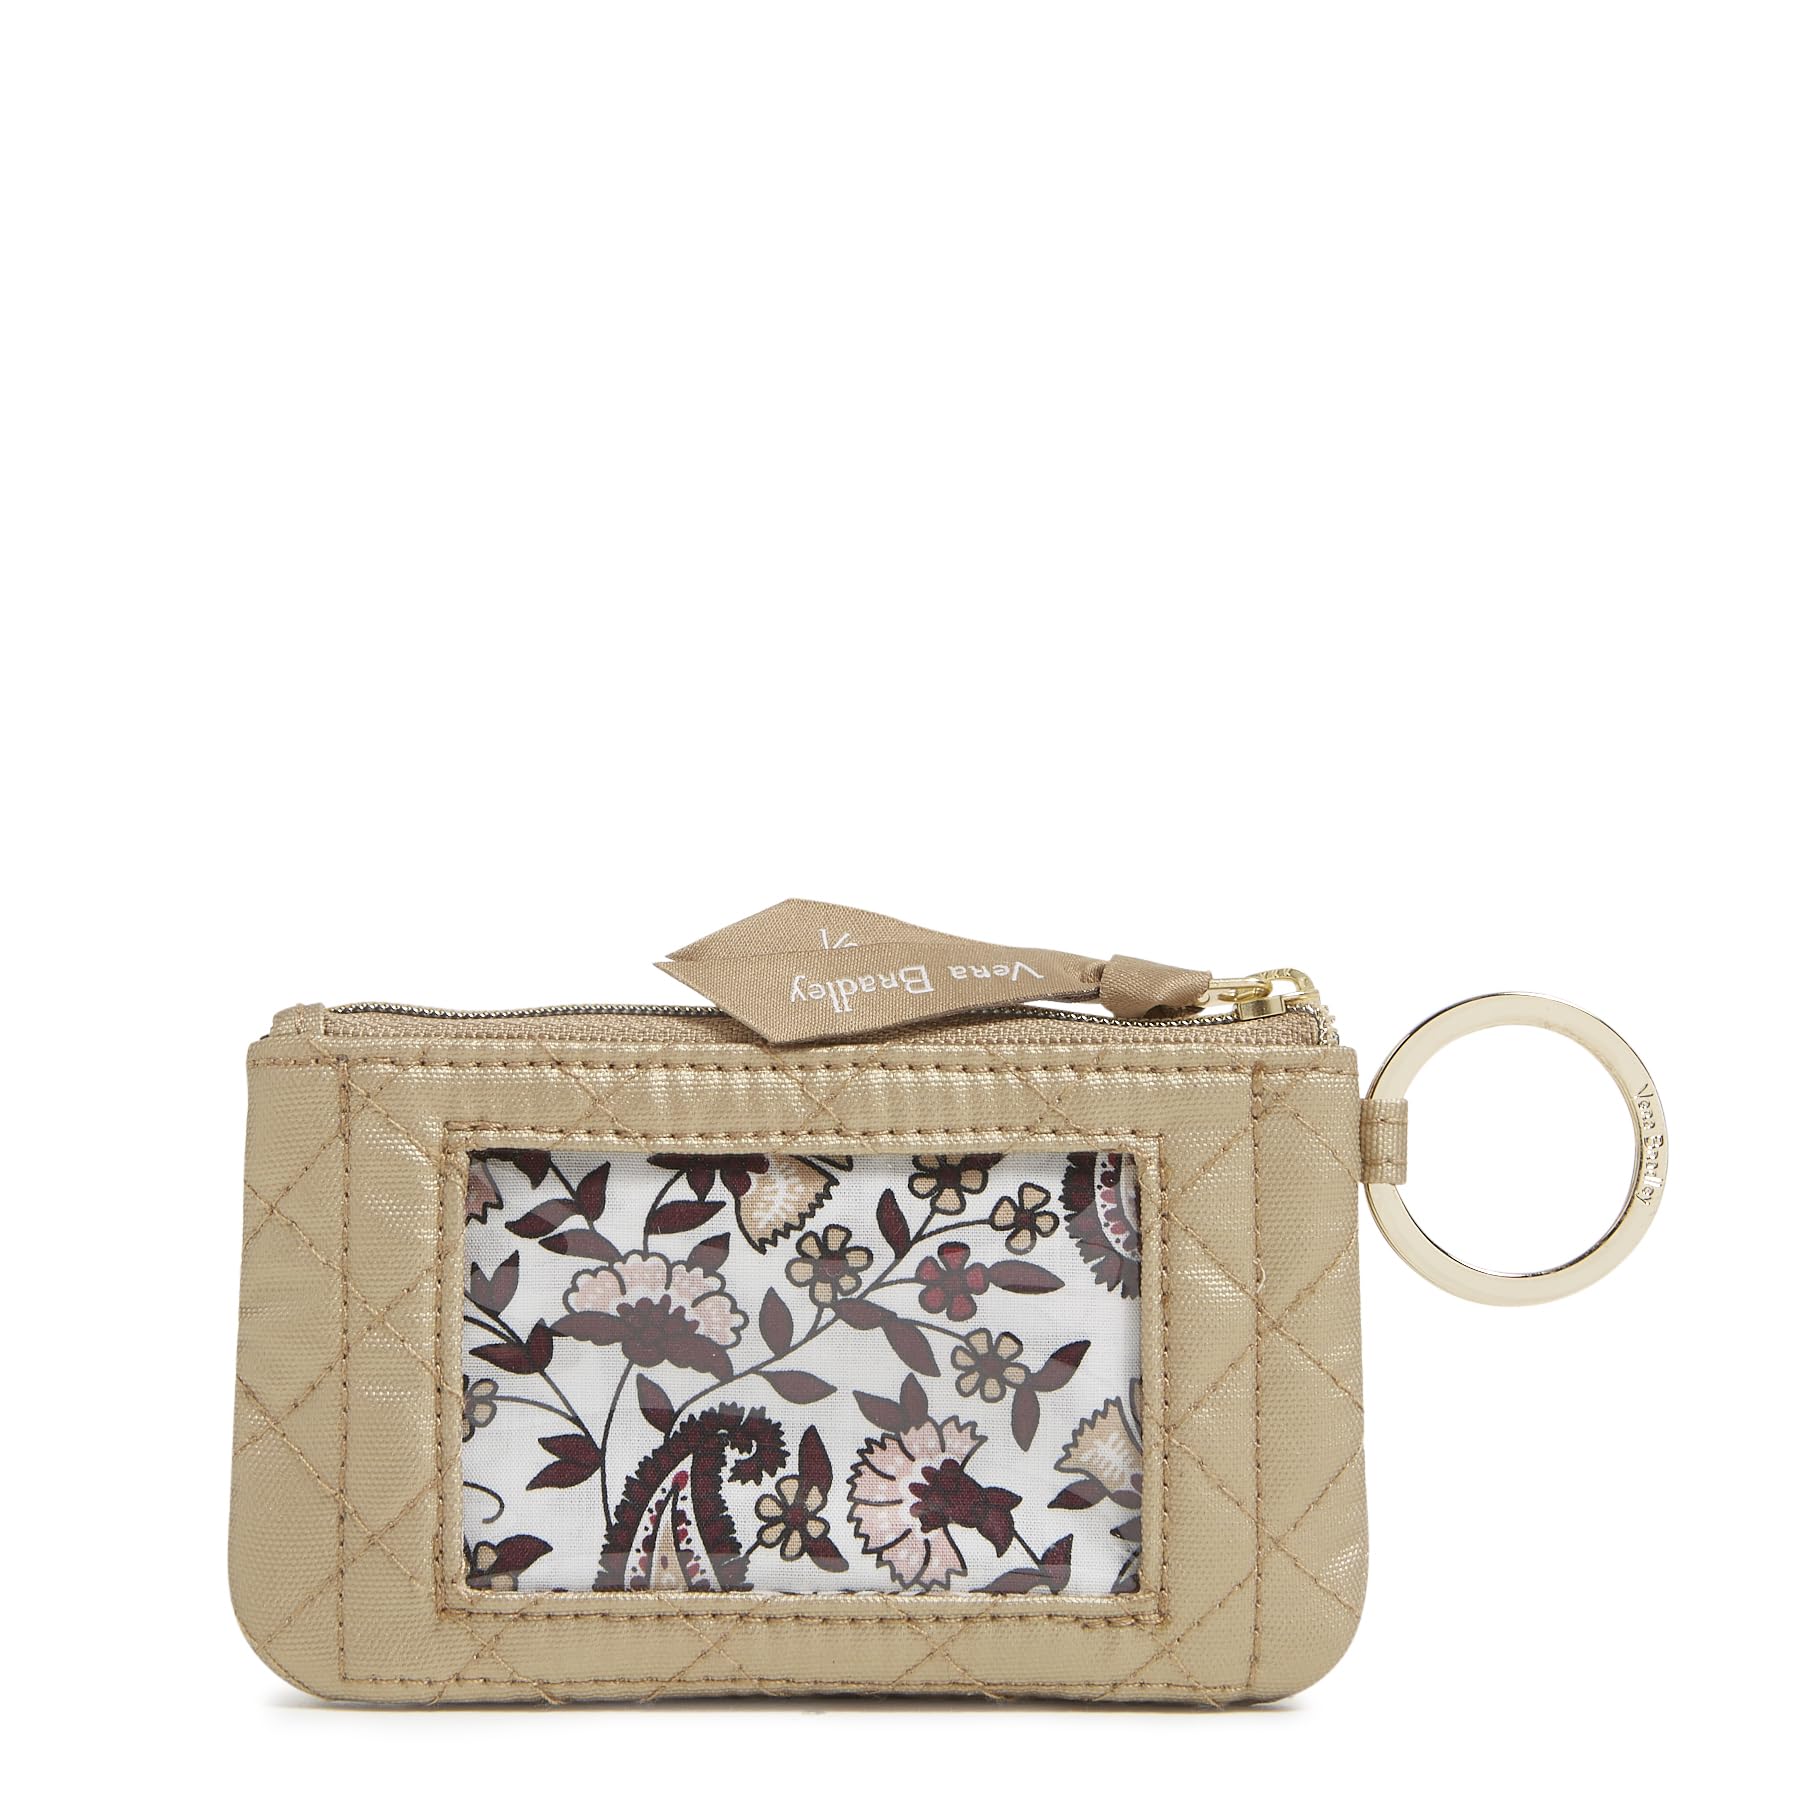 Vera Bradley Women's Cotton Zip ID Case Wallet, Champagne Gold Pearl, One Size